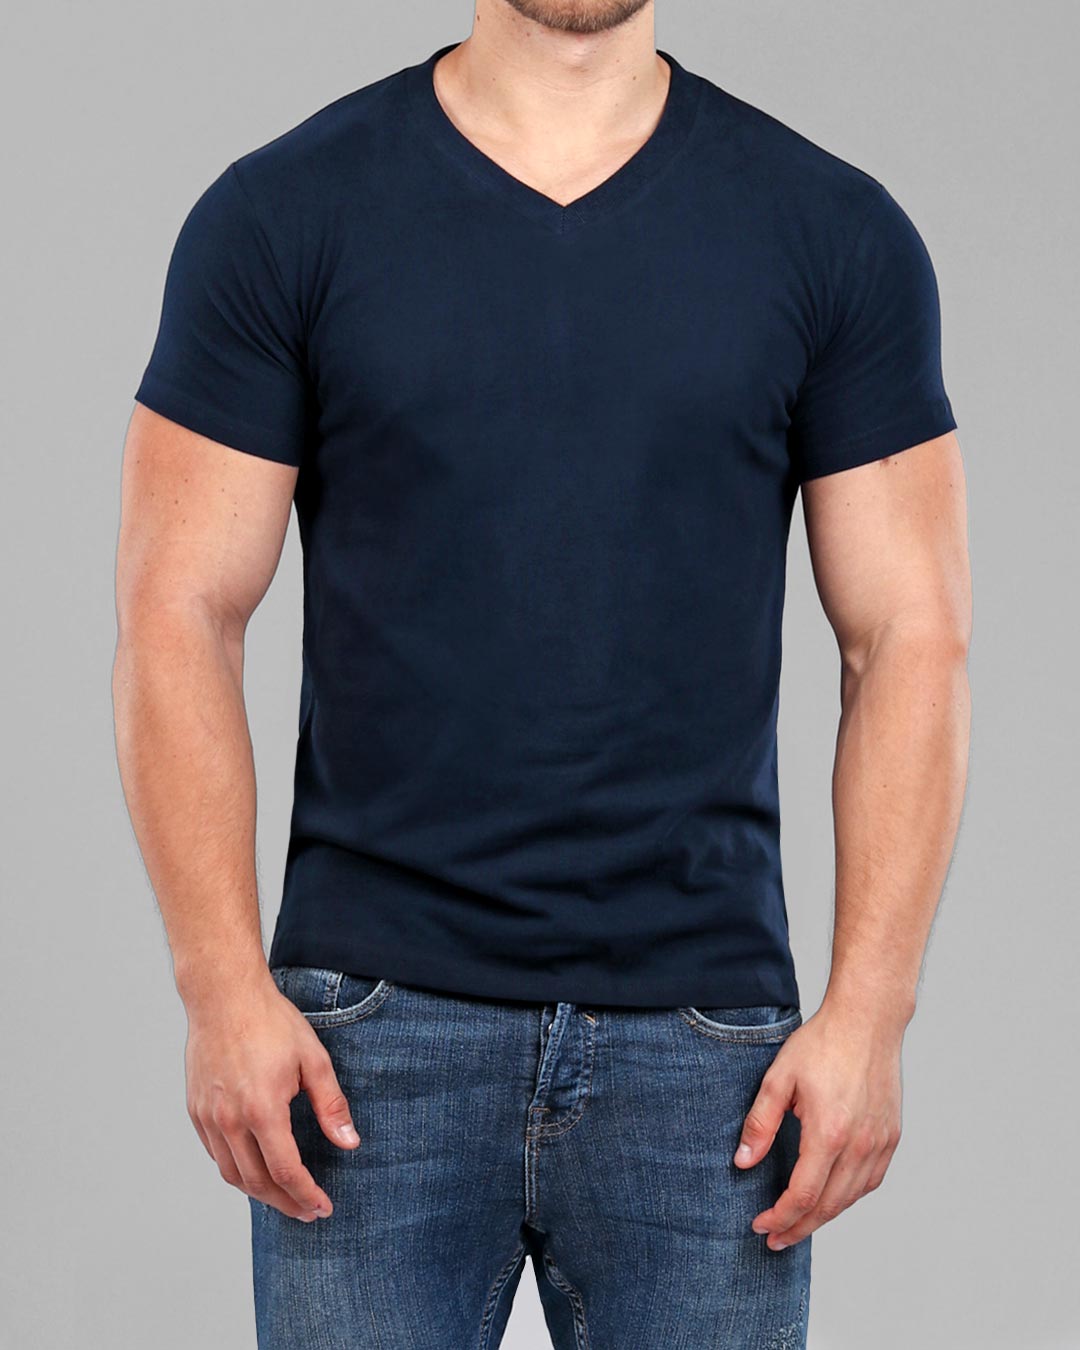 V-Neck Basic Muscle Fitted Plain T-Shirt - Navy